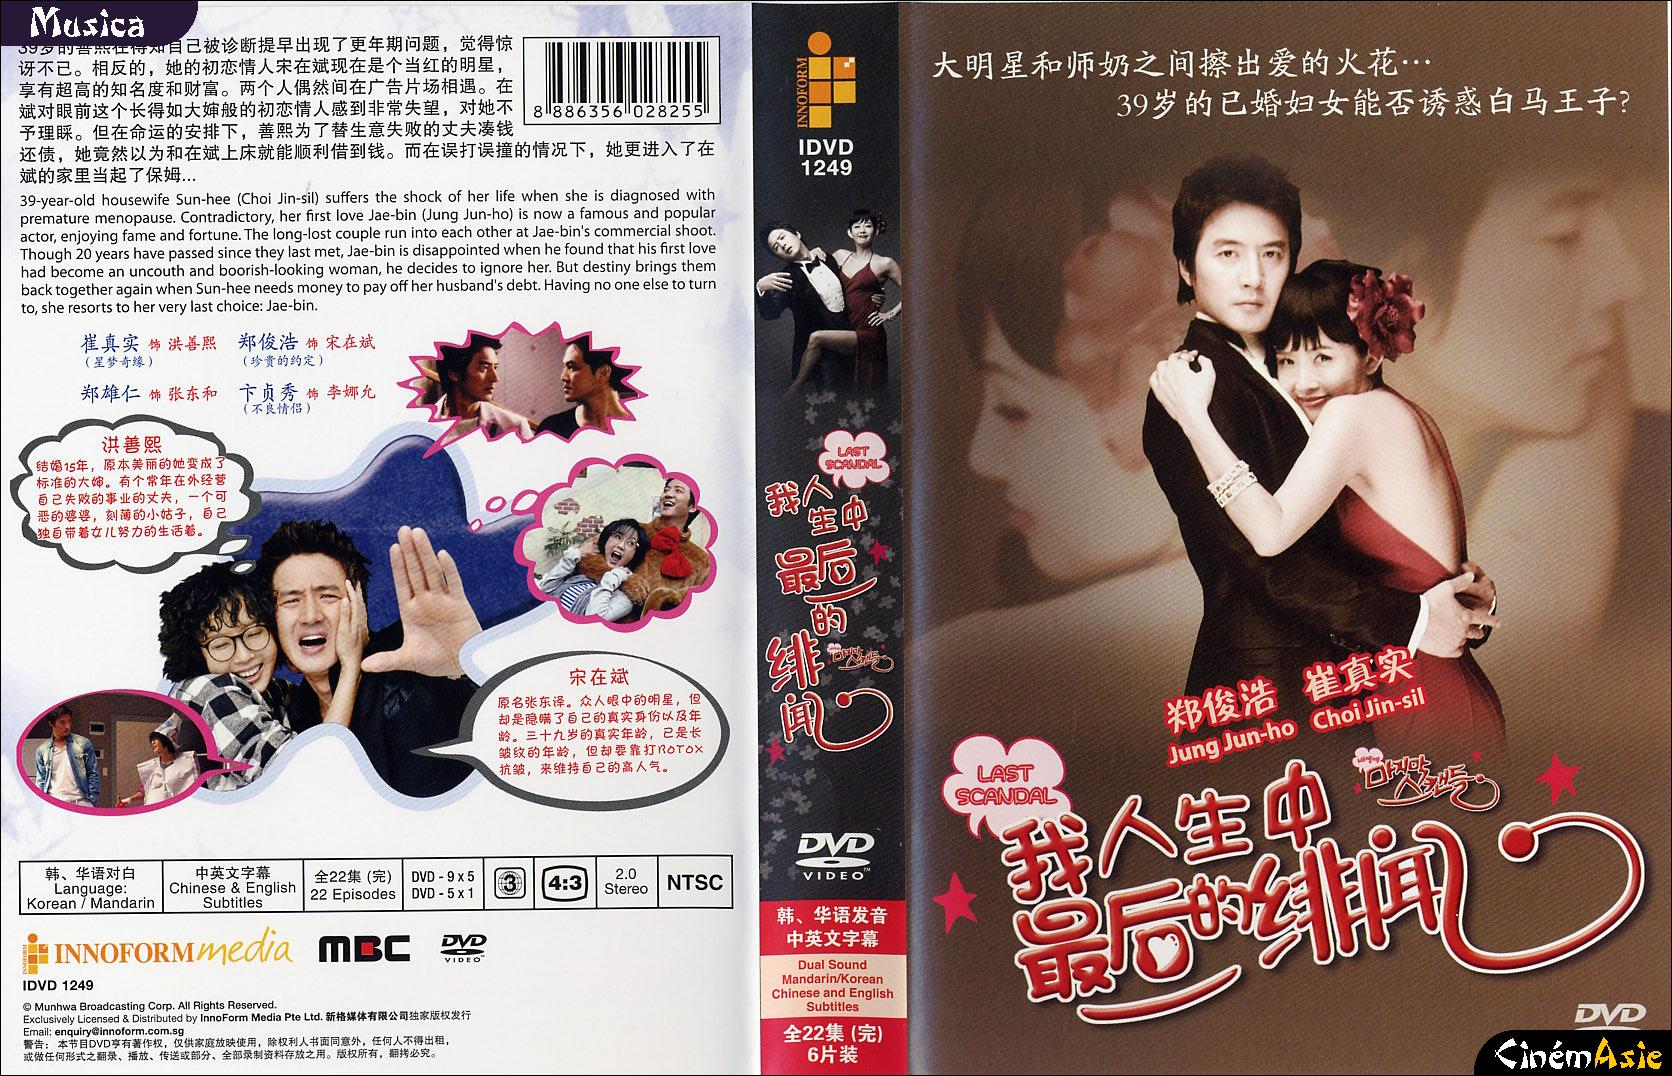 DVD Last Scandal InnoForm Media 6 DVD (22 Episodes)